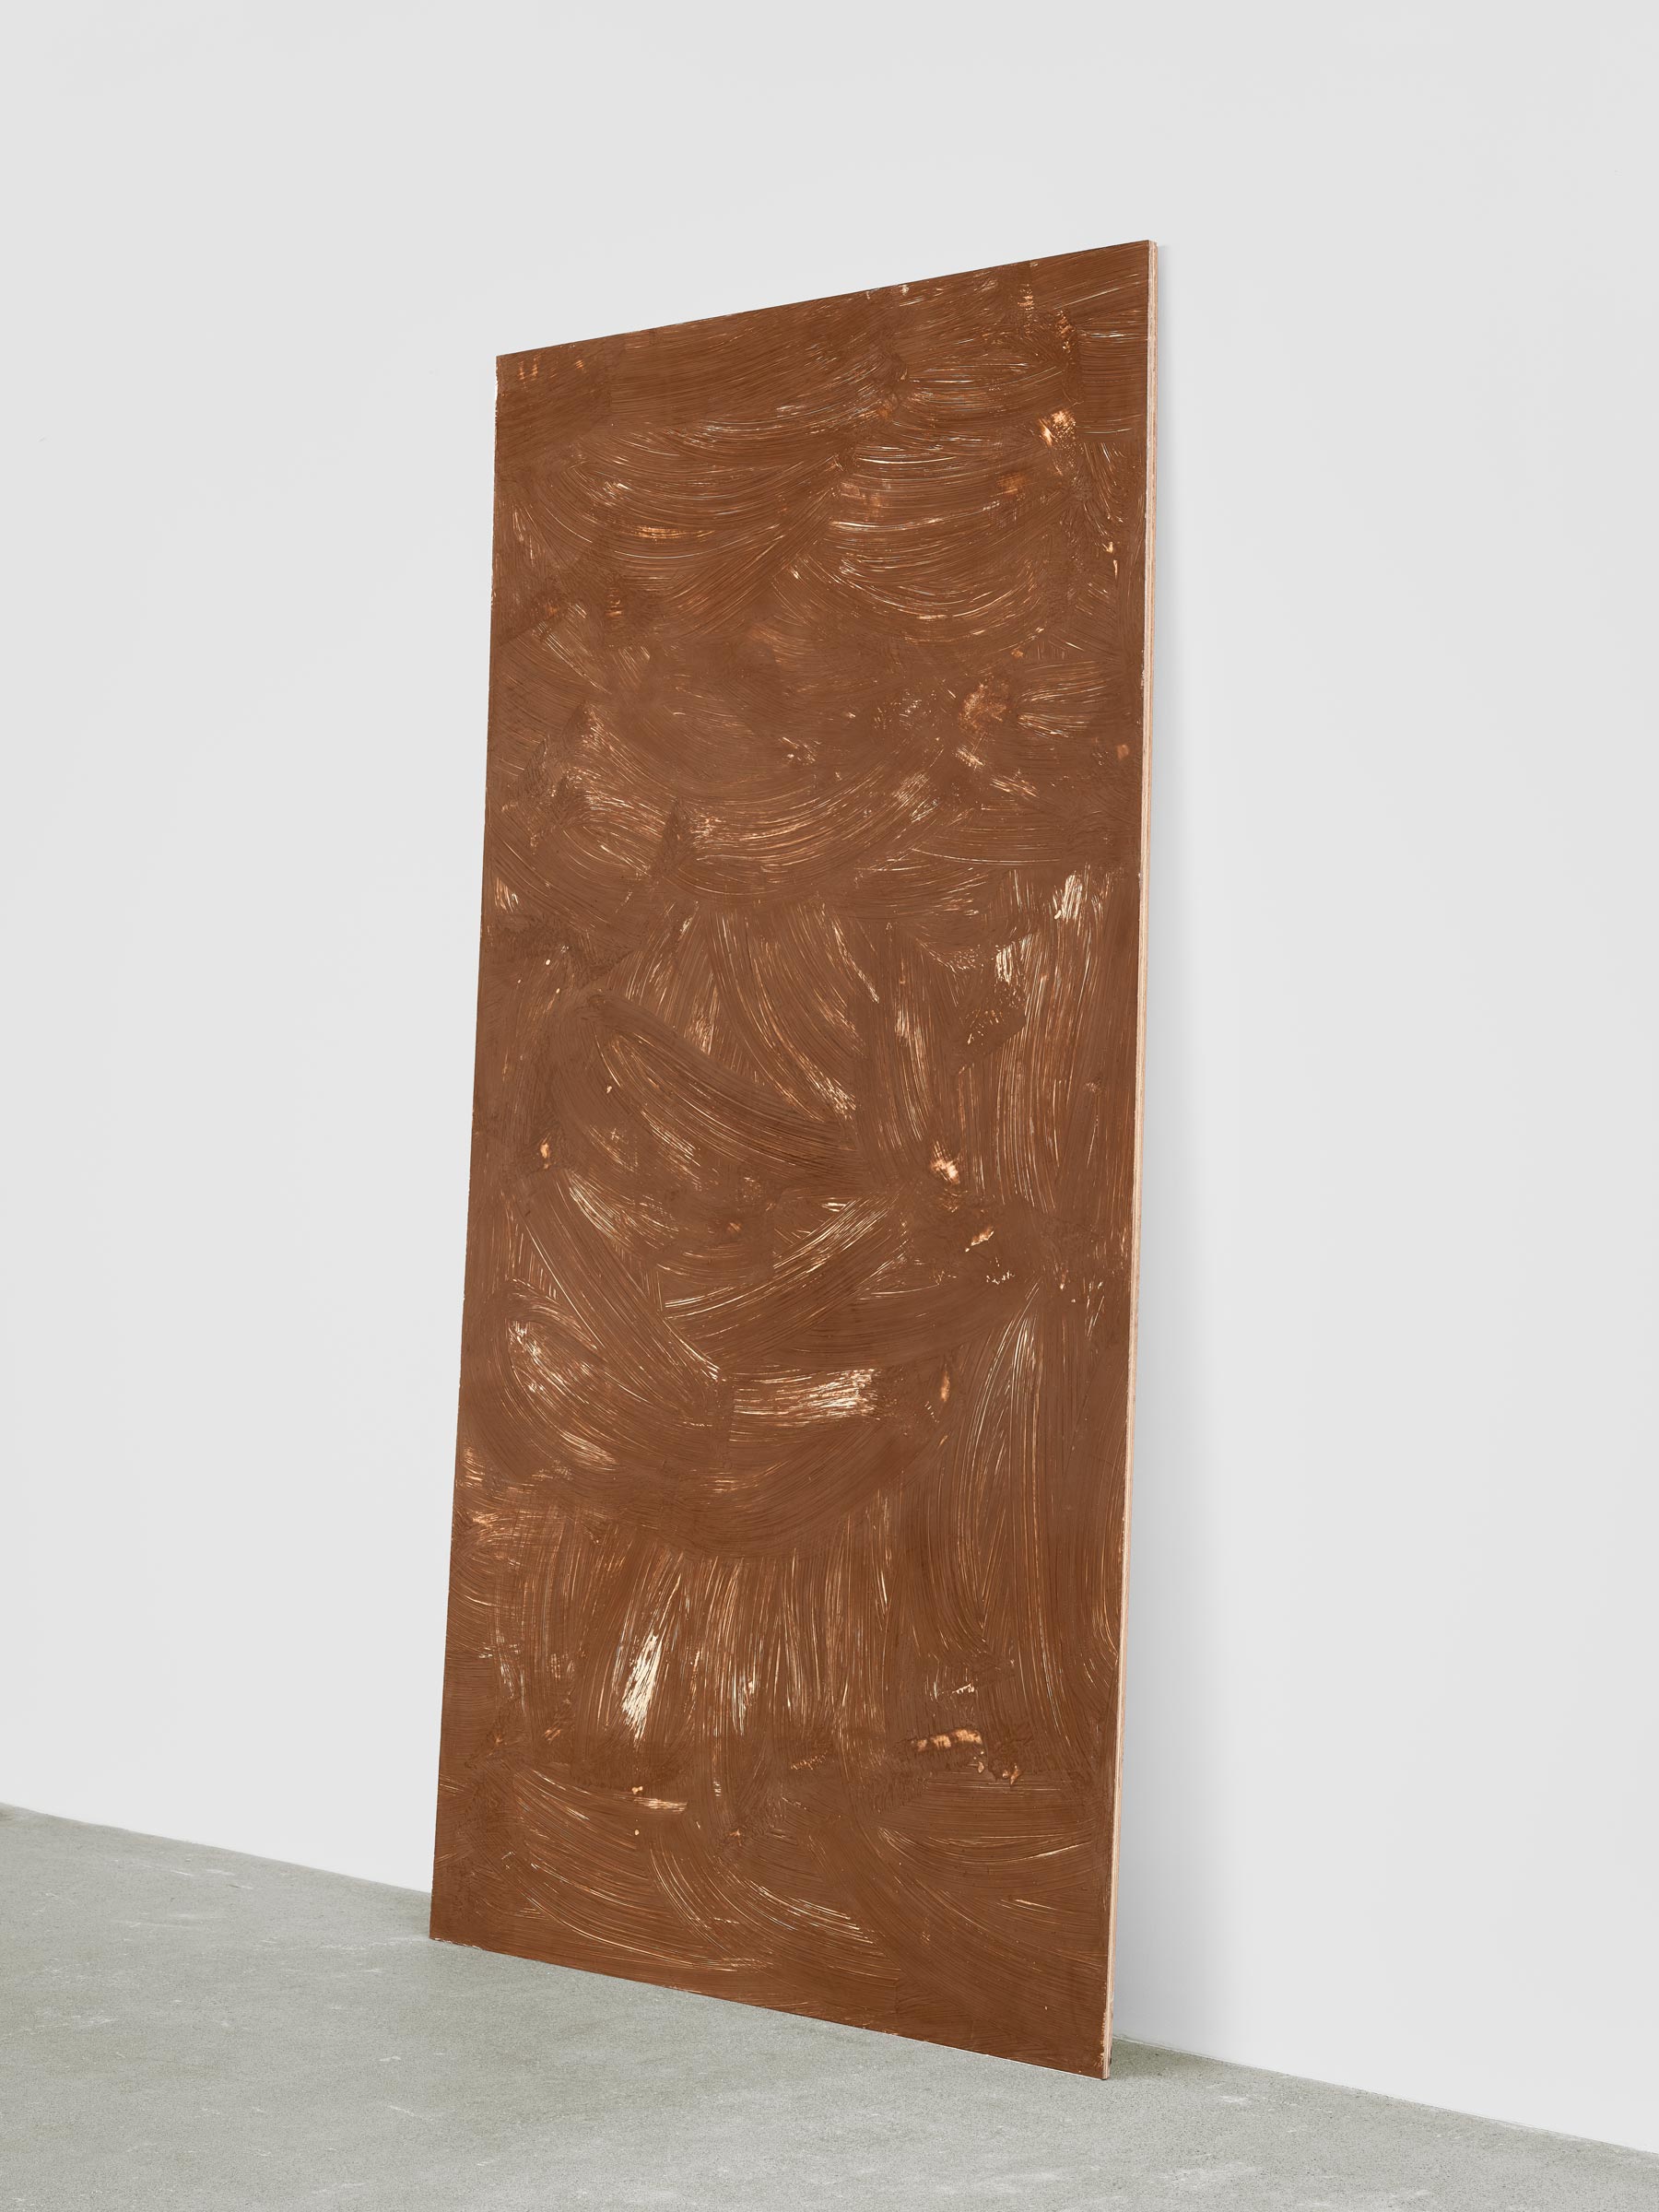 Alex Kwartler, Night Sky V, 2022, Venetian plaster on plywood, 96 x 48 in.